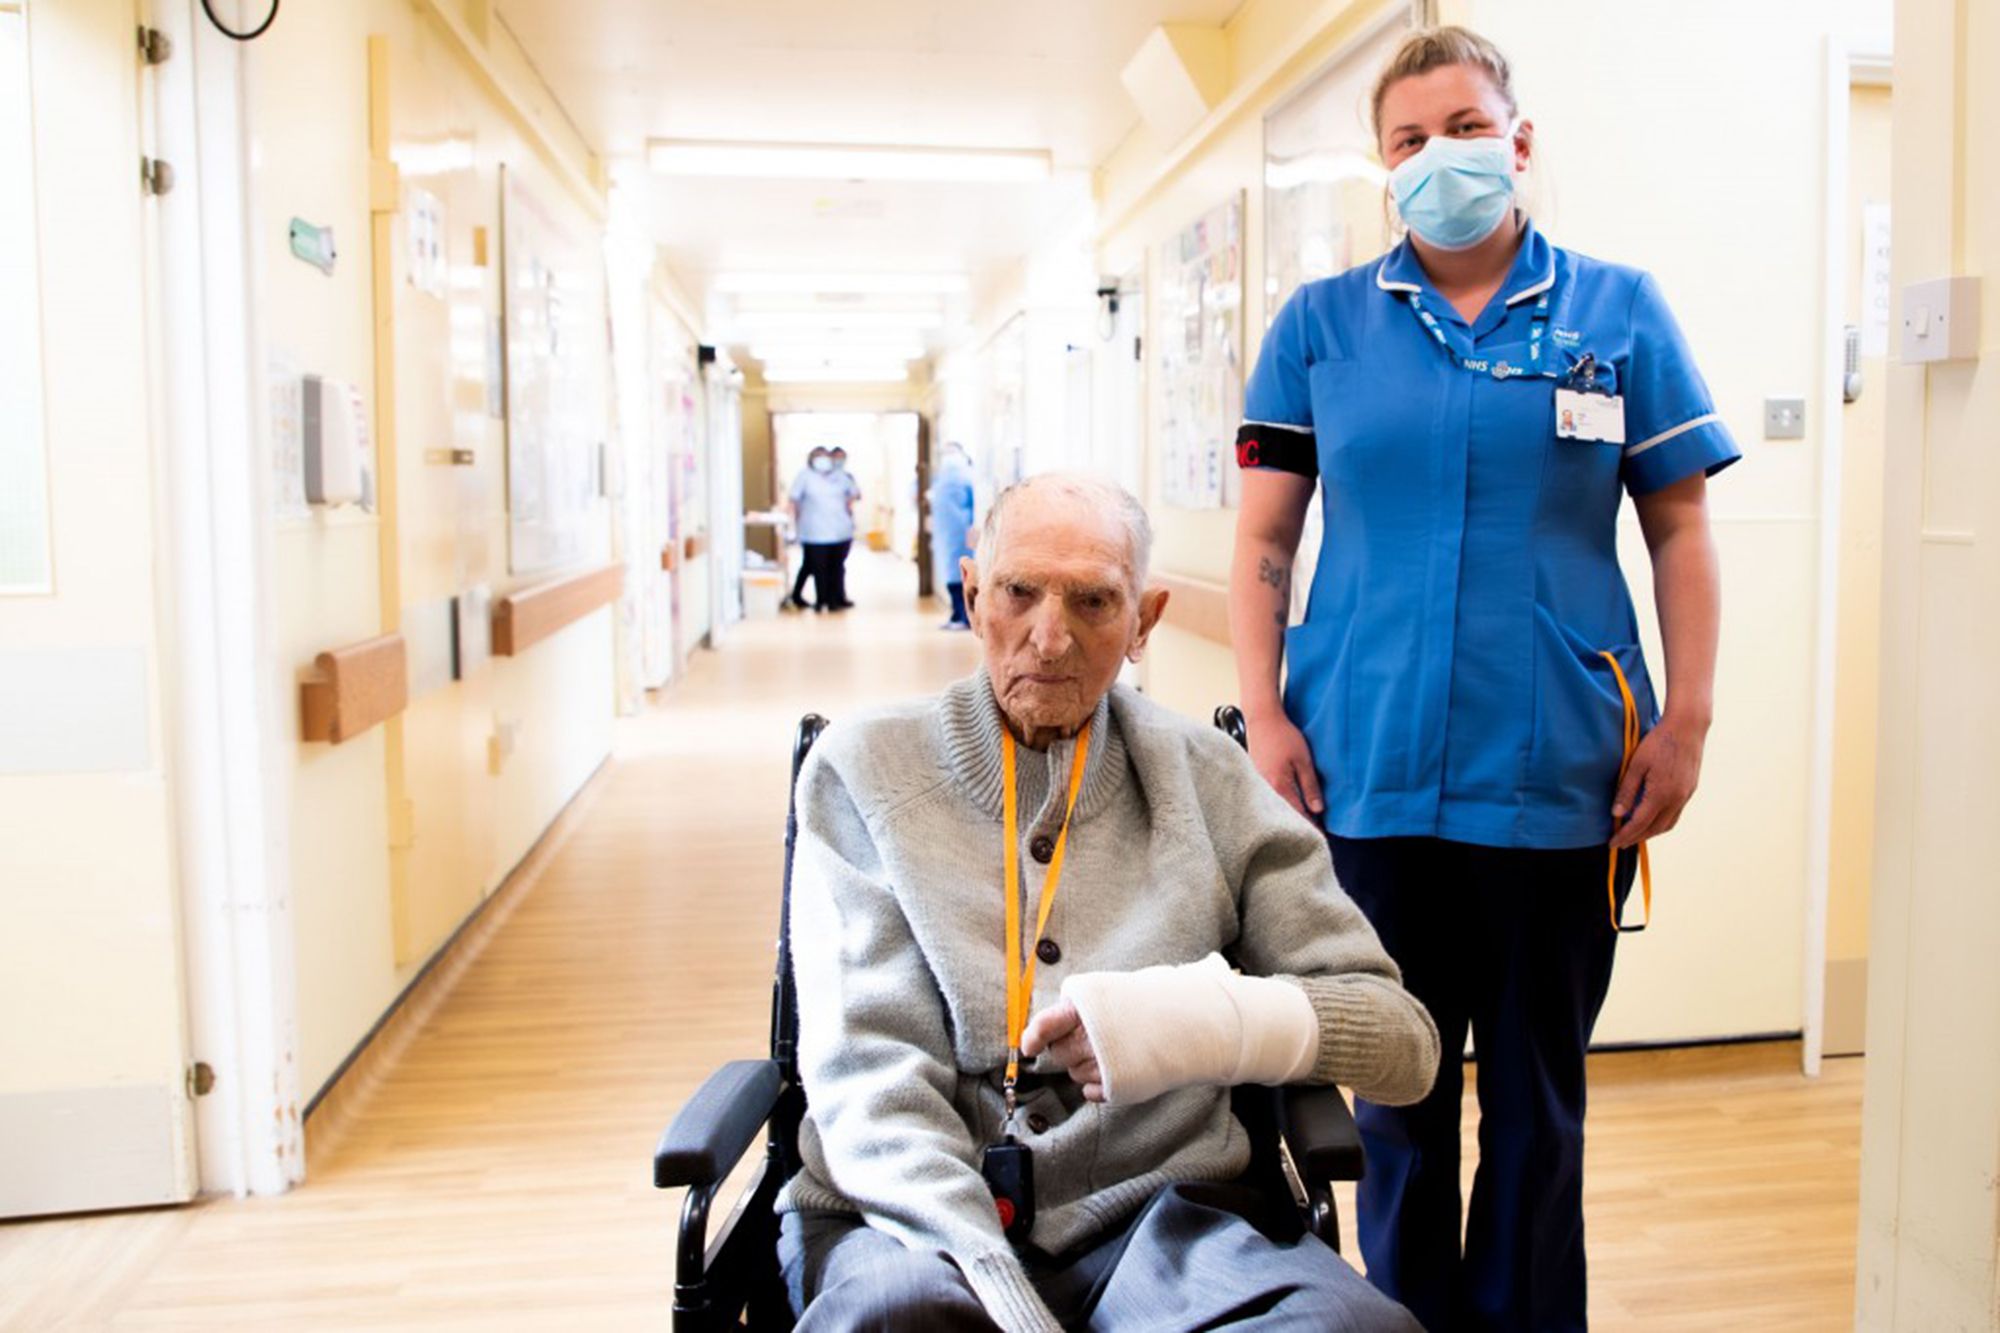 99-year-old WWII vet albert chambers applause after beating coronavirus